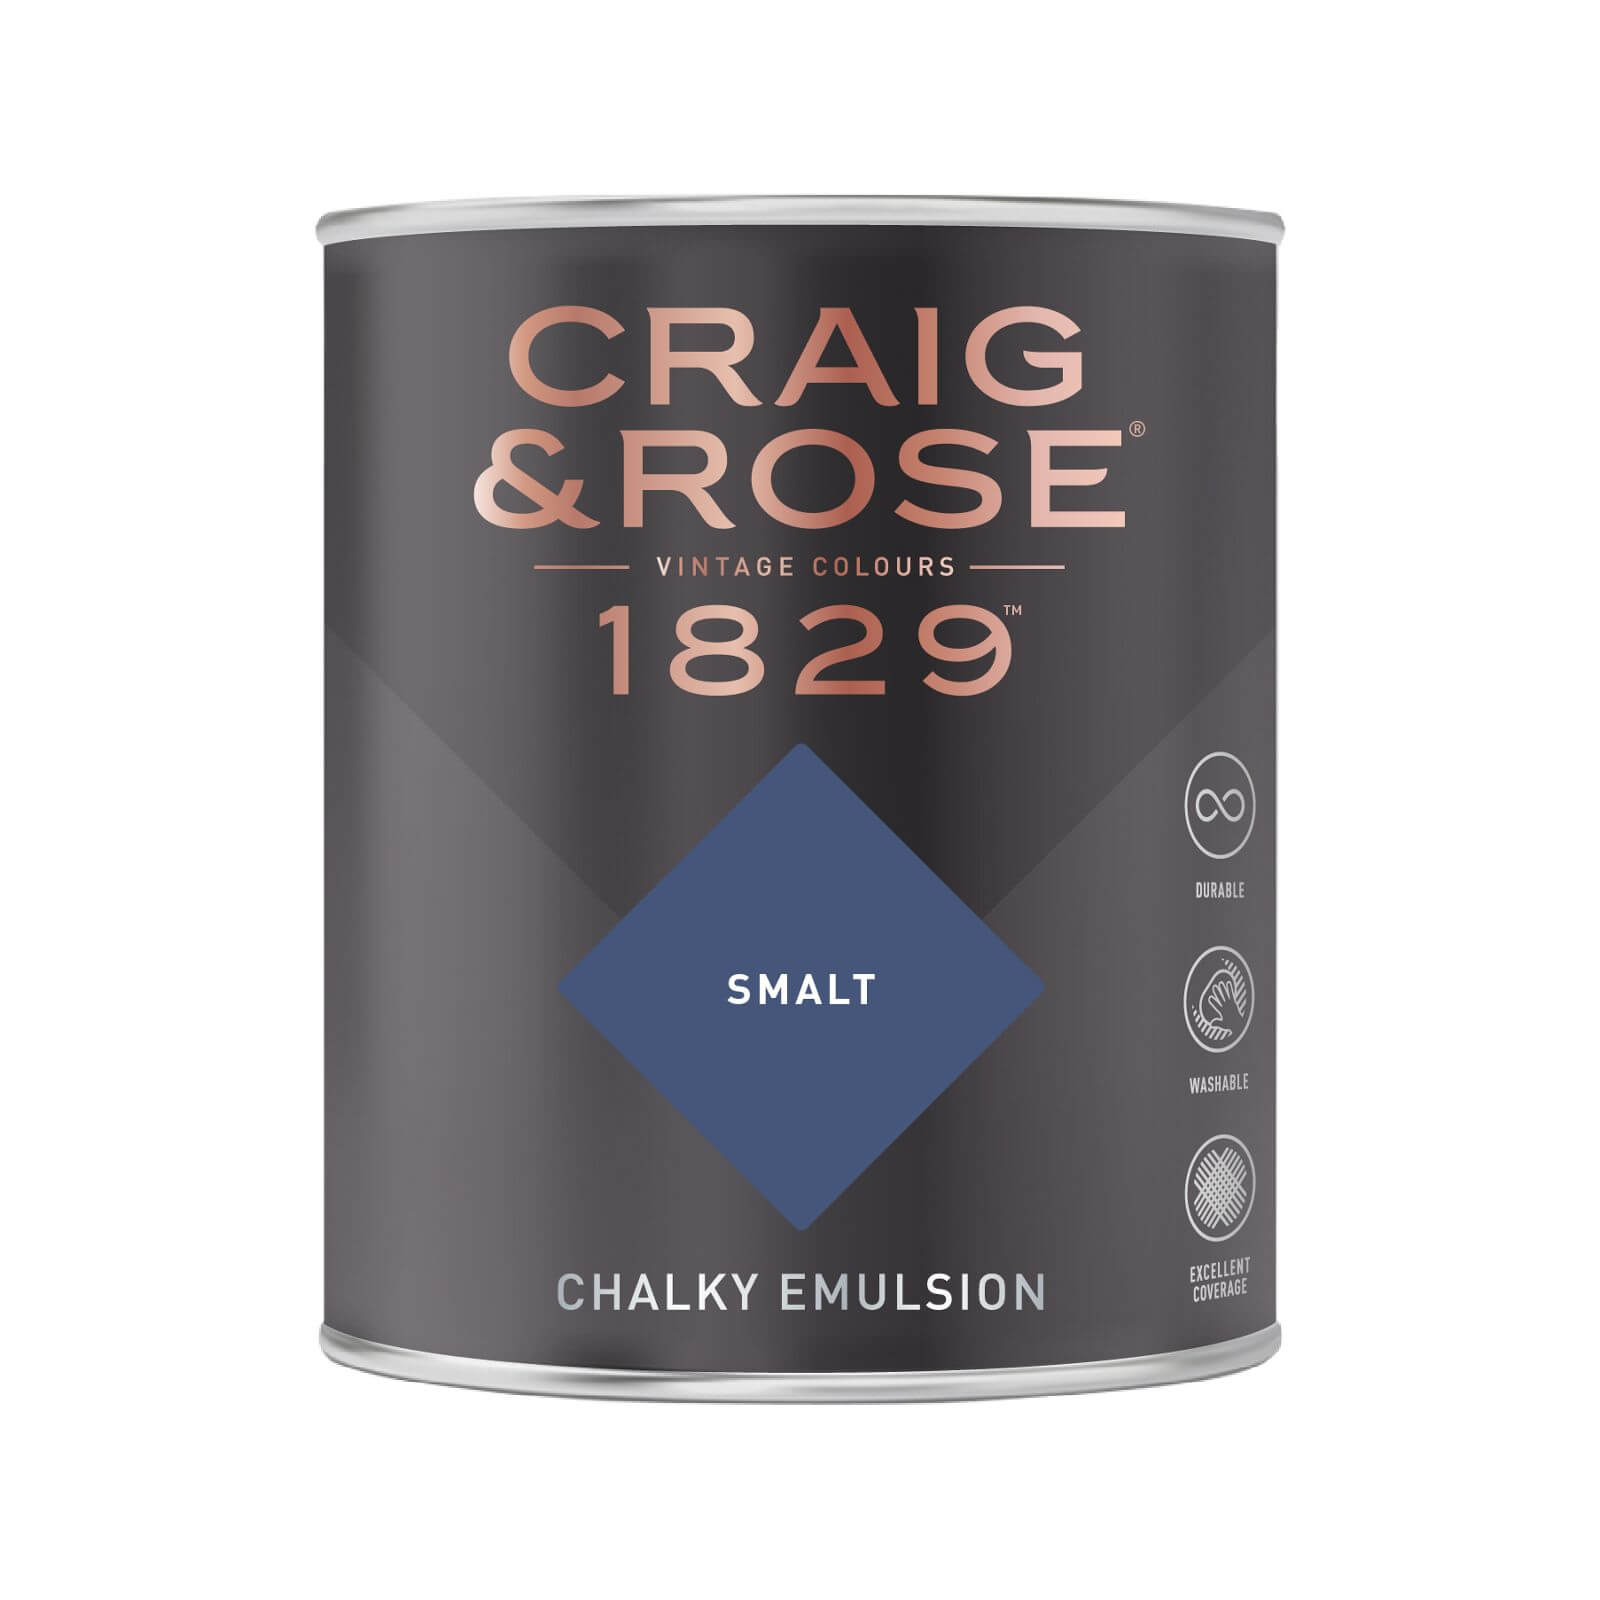 Craig & Rose 1829 Chalky Emulsion Paint Smalt - 750ml